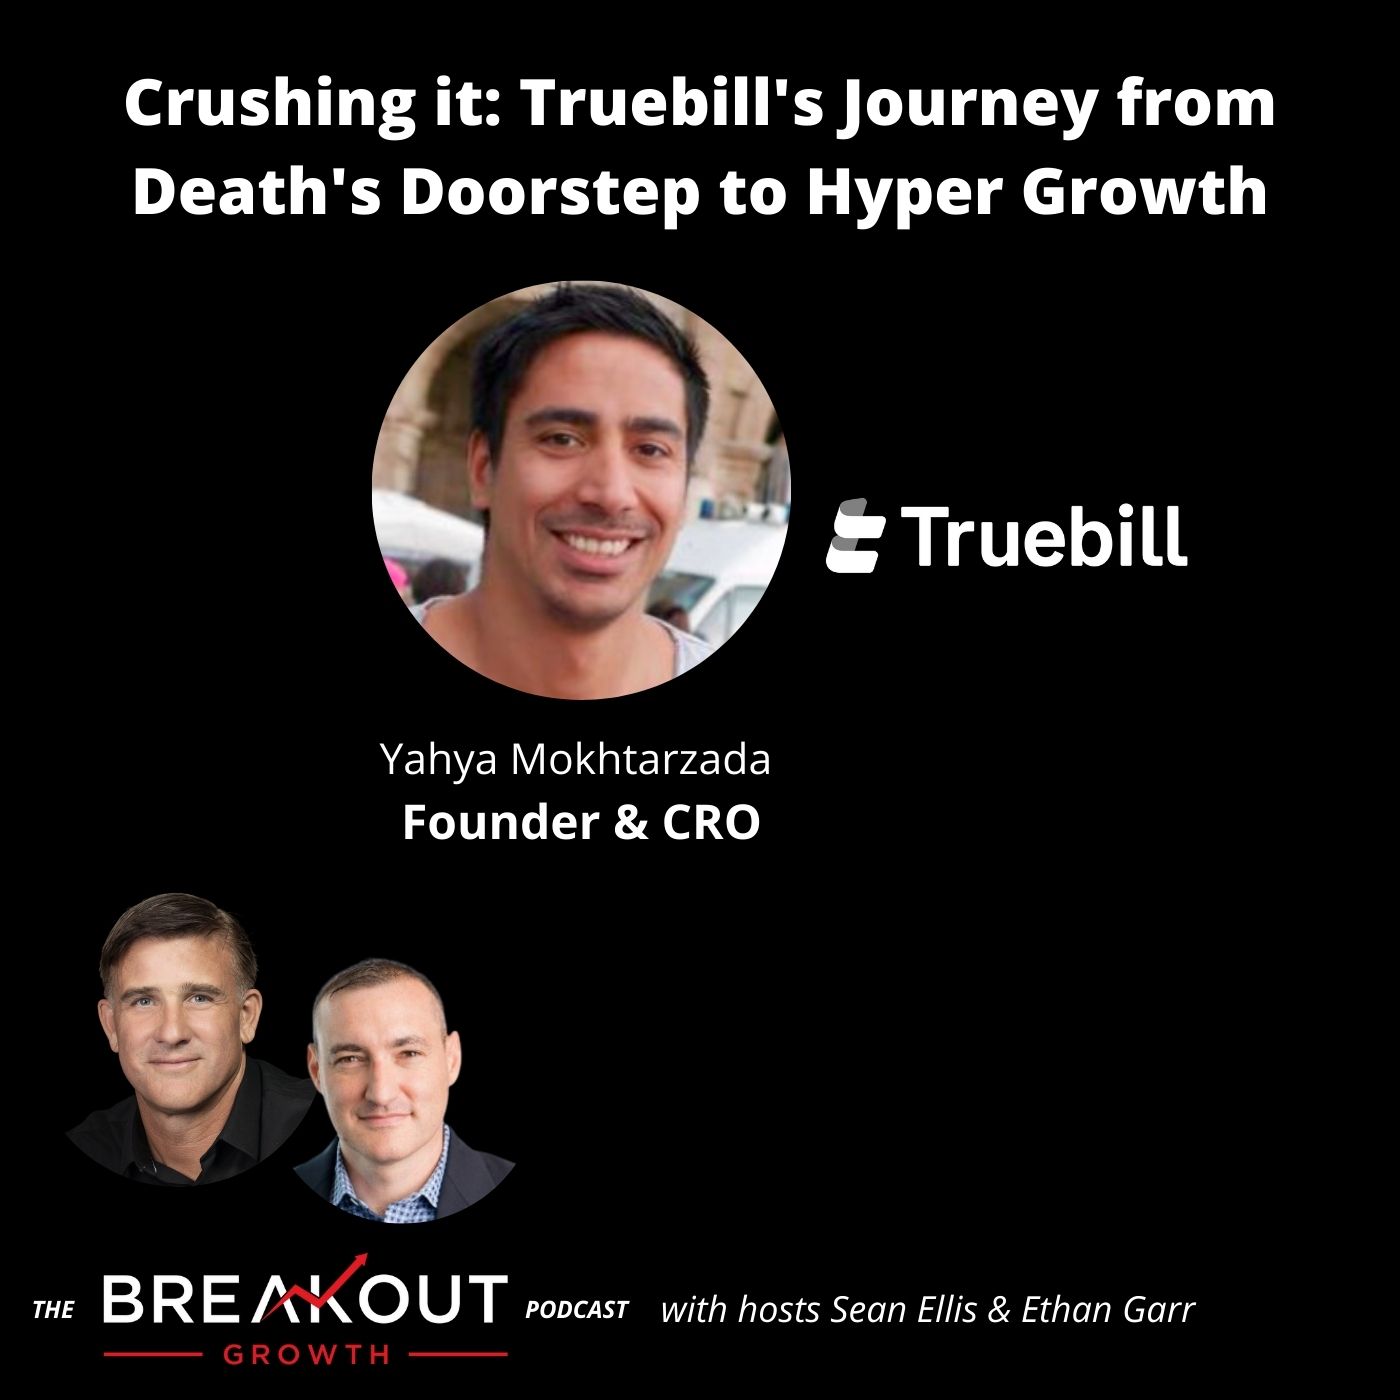 Crushing it: Truebill's Journey from Death's Doorstep to Hyper Growth